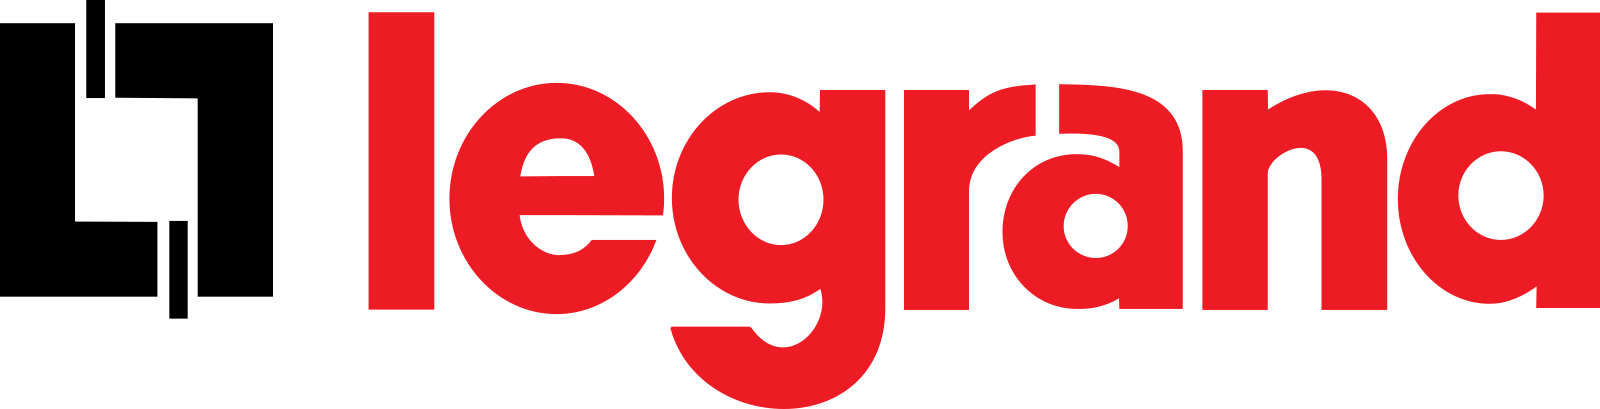 legrand logo 2 - Legrand Logo